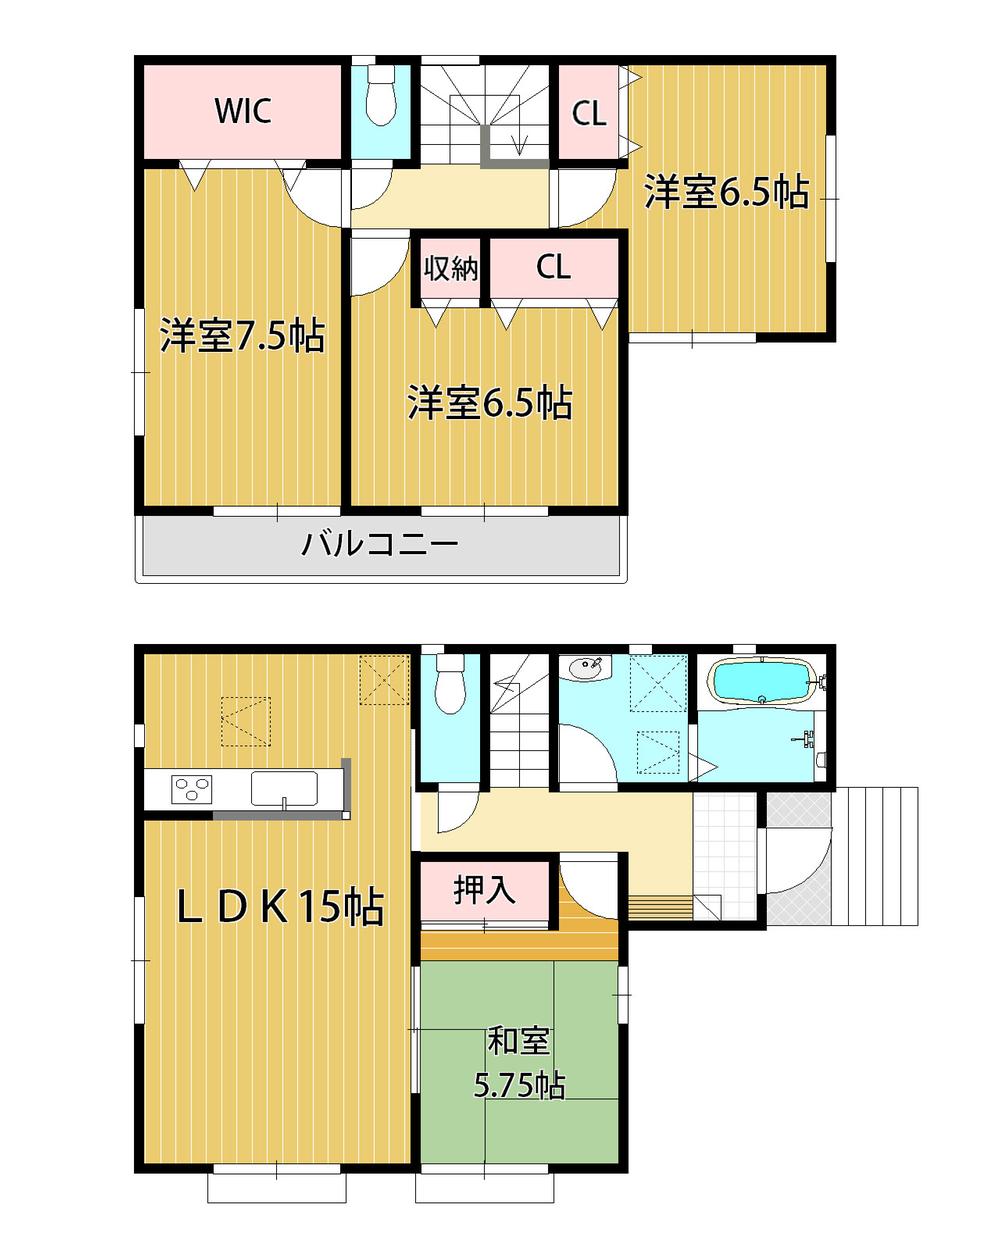 Floor plan. (1 Building), Price 23.8 million yen, 4LDK+S, Land area 165.29 sq m , Building area 99.36 sq m